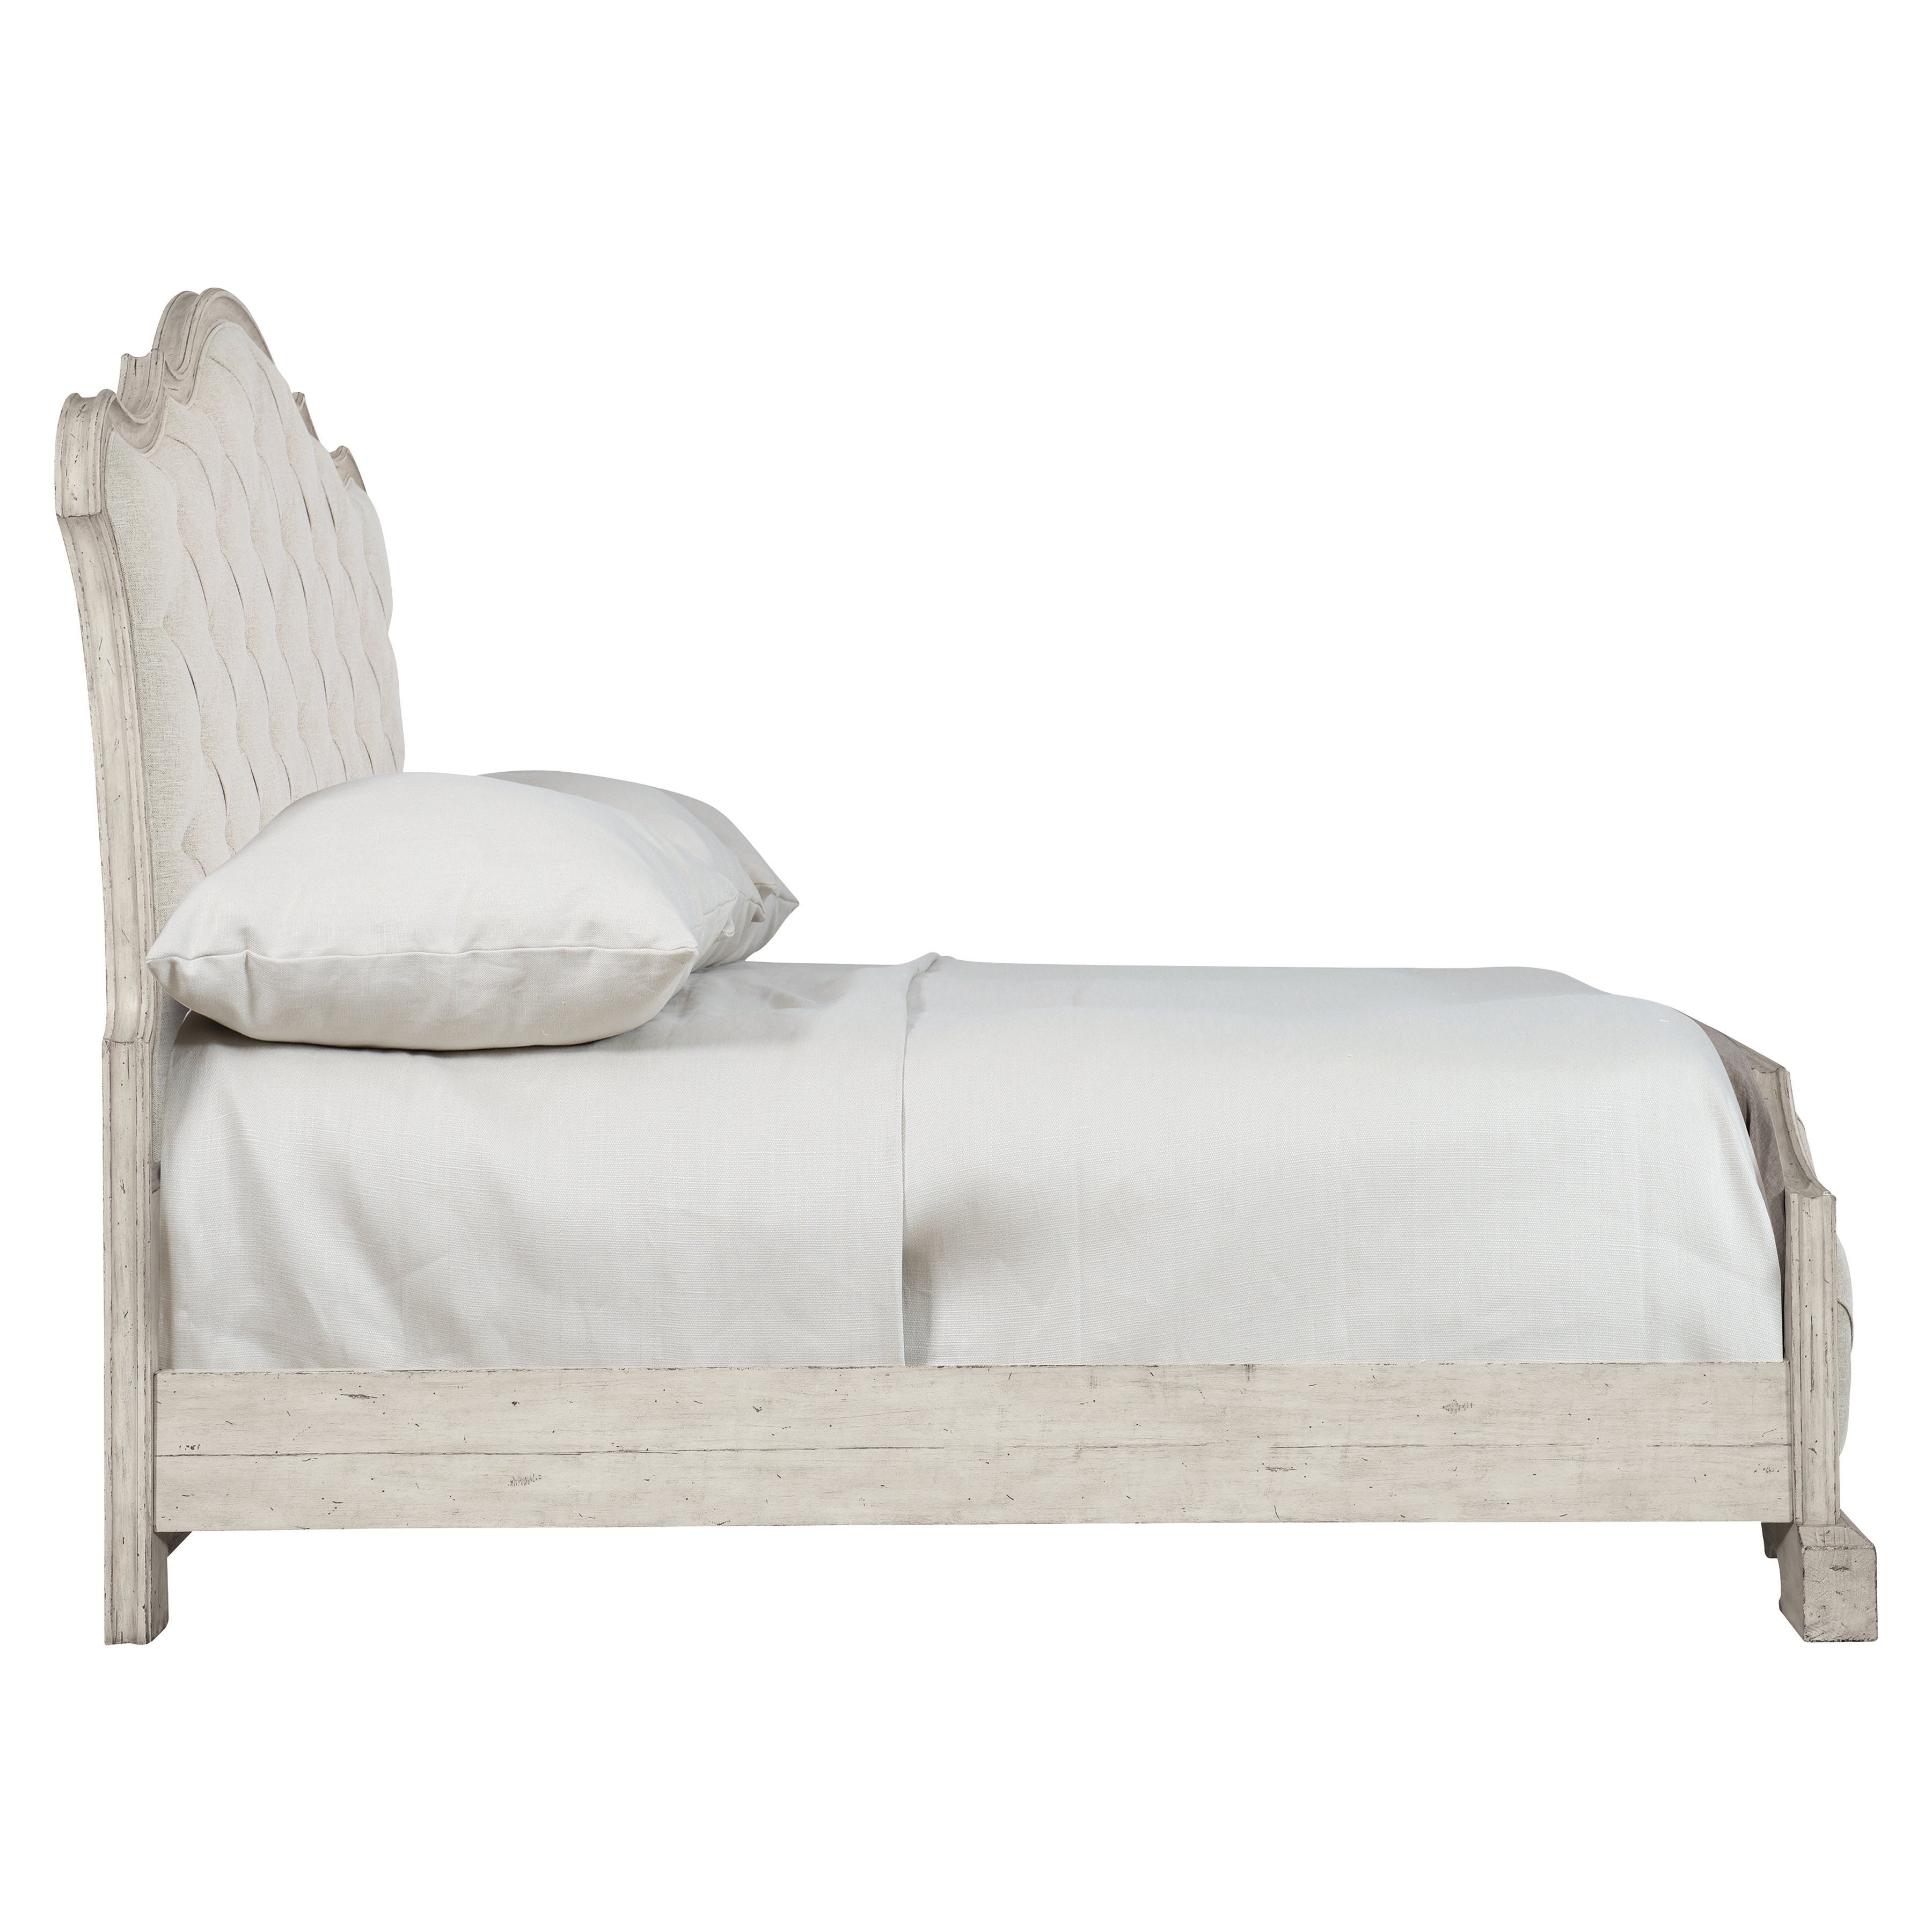 Mirabelle Upholstered California King Panel Bed